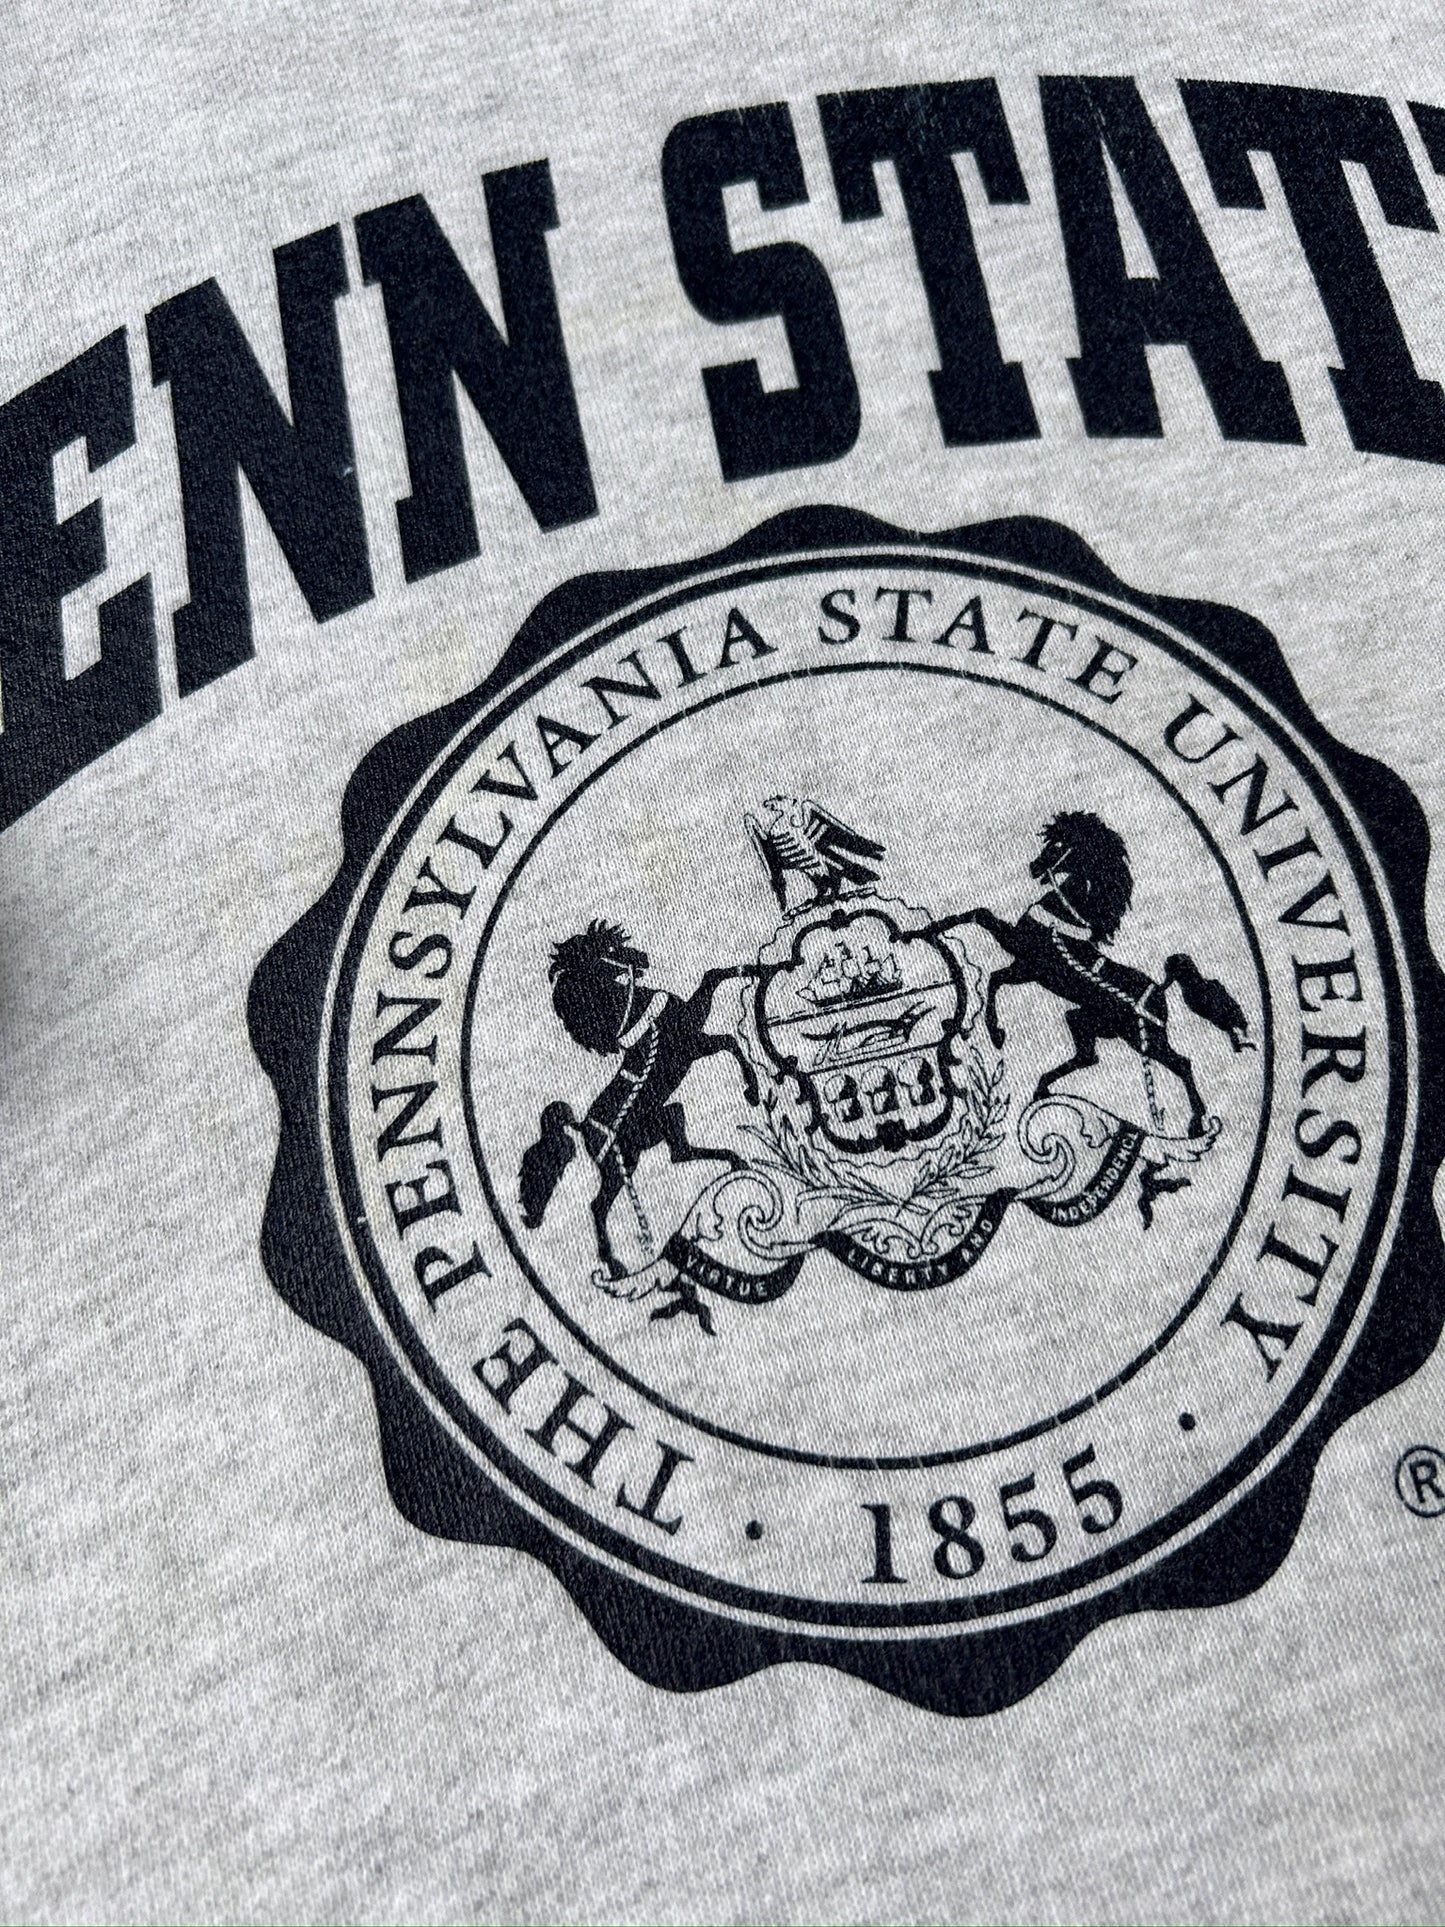 Penn State Sweatshirt 90's - XL